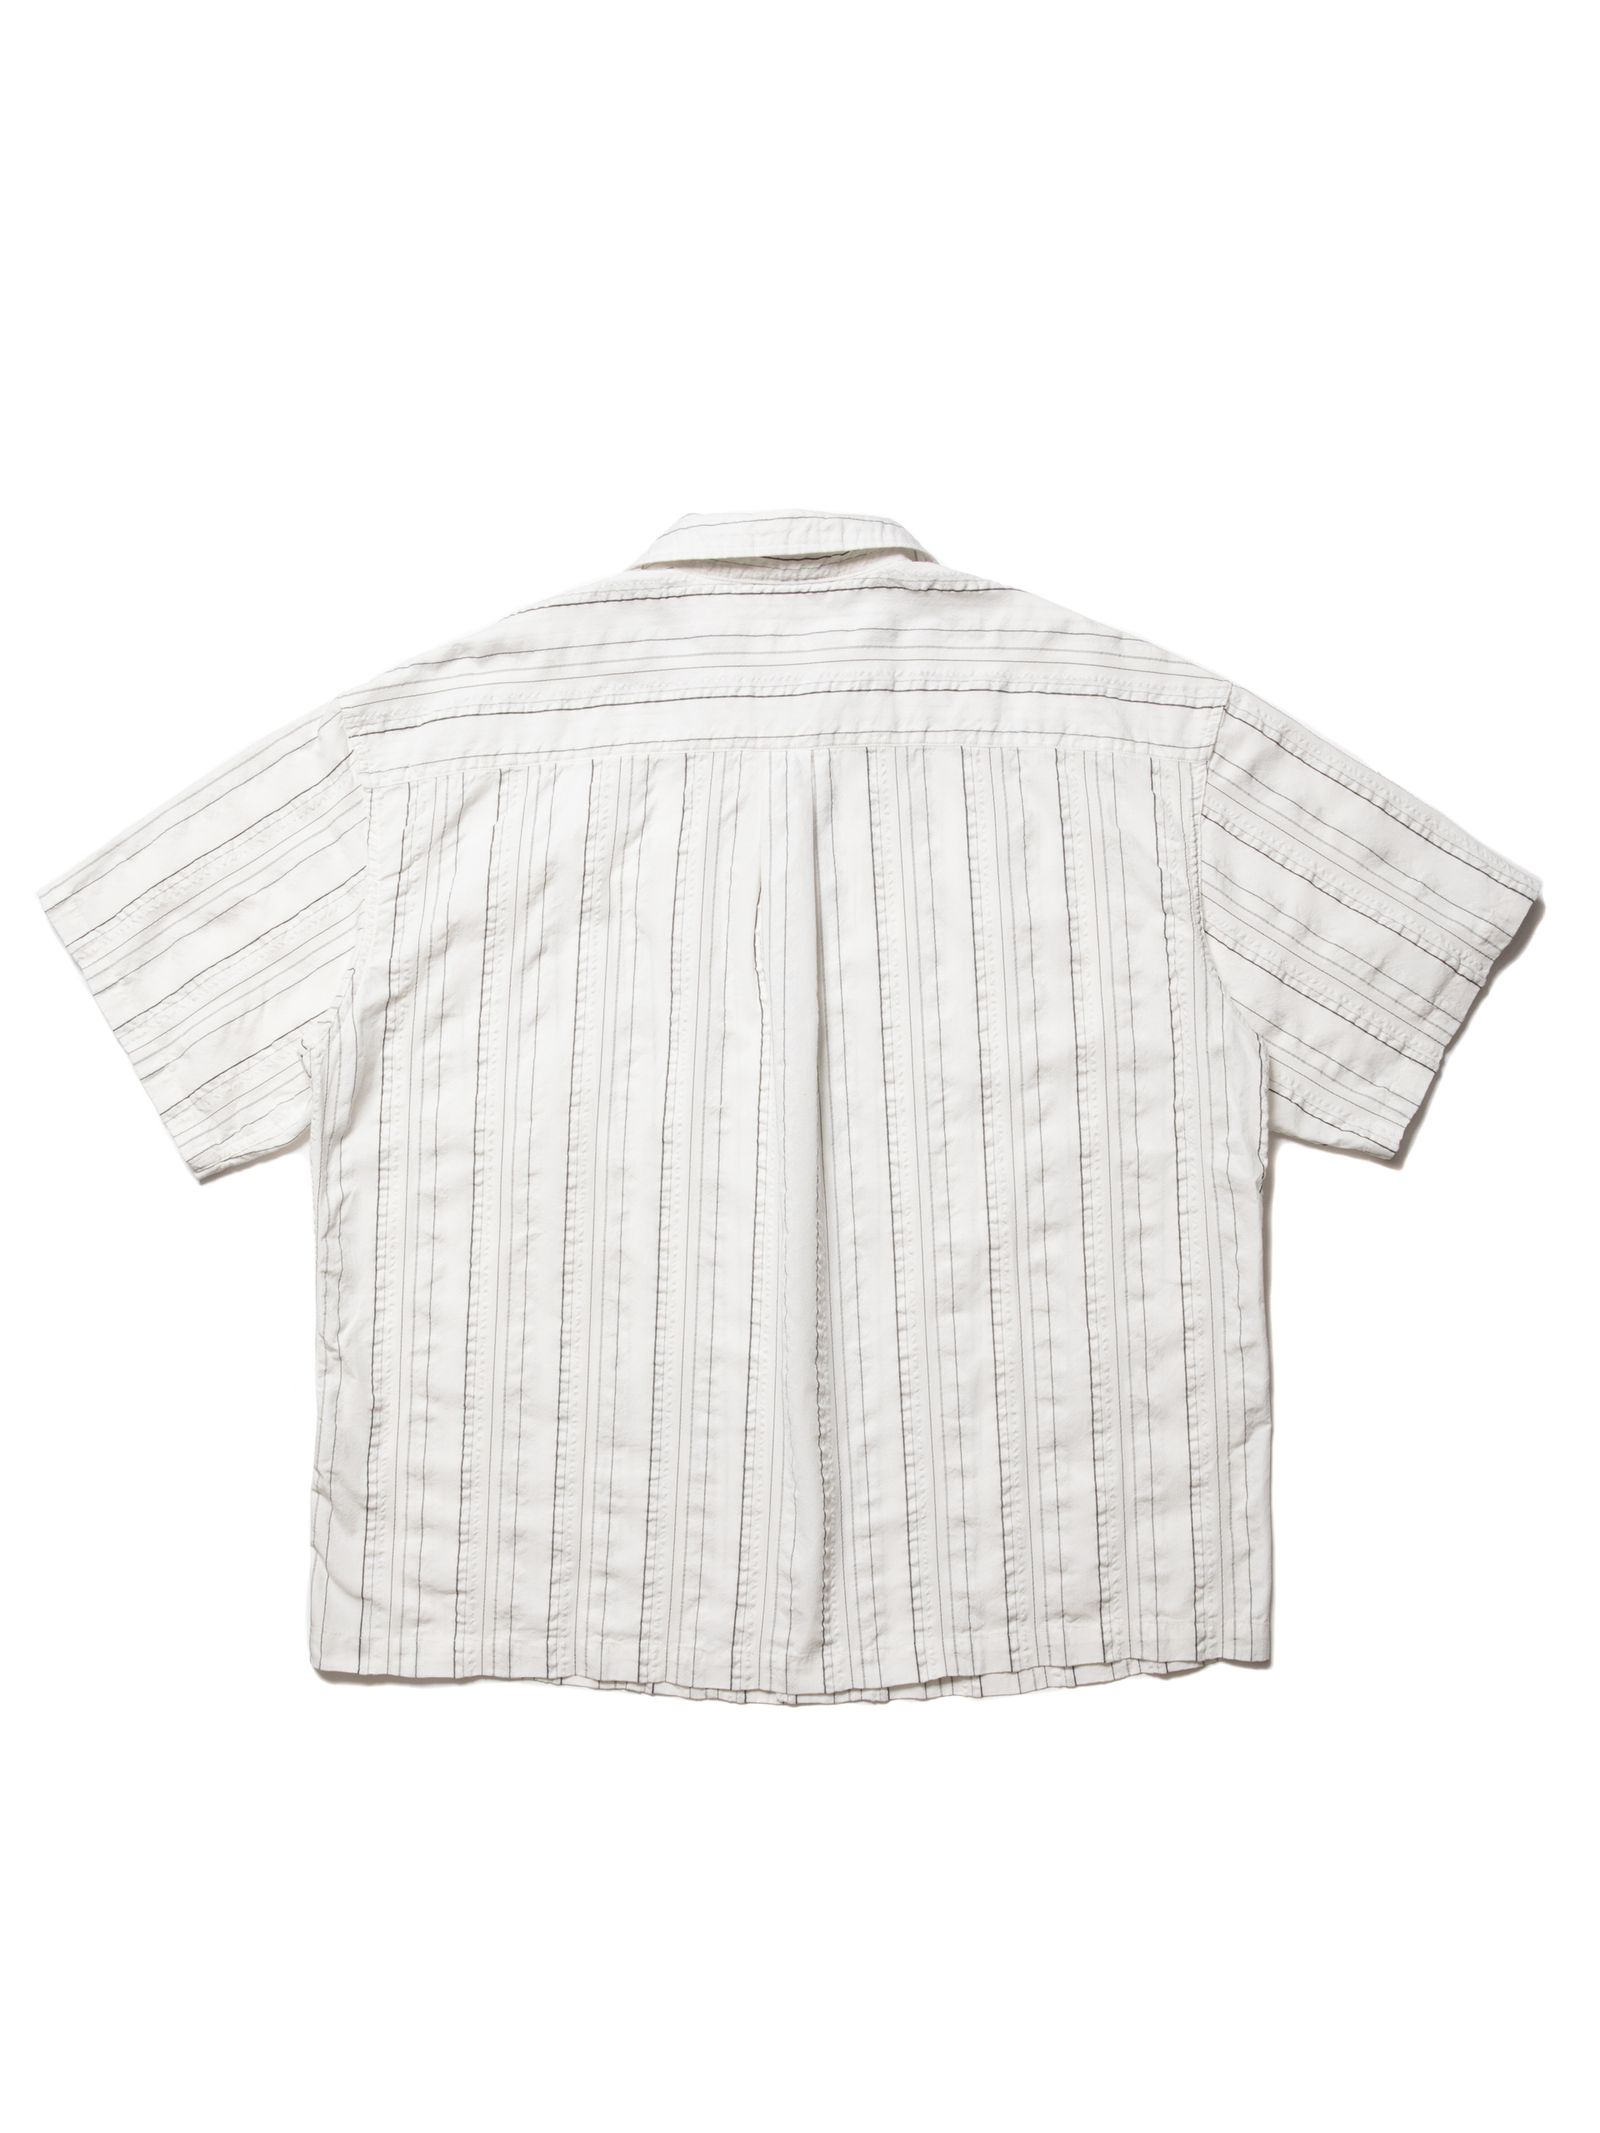 COOTIE PRODUCTIONS - Stripe Sucker Cloth Open Collar S/S Shirt